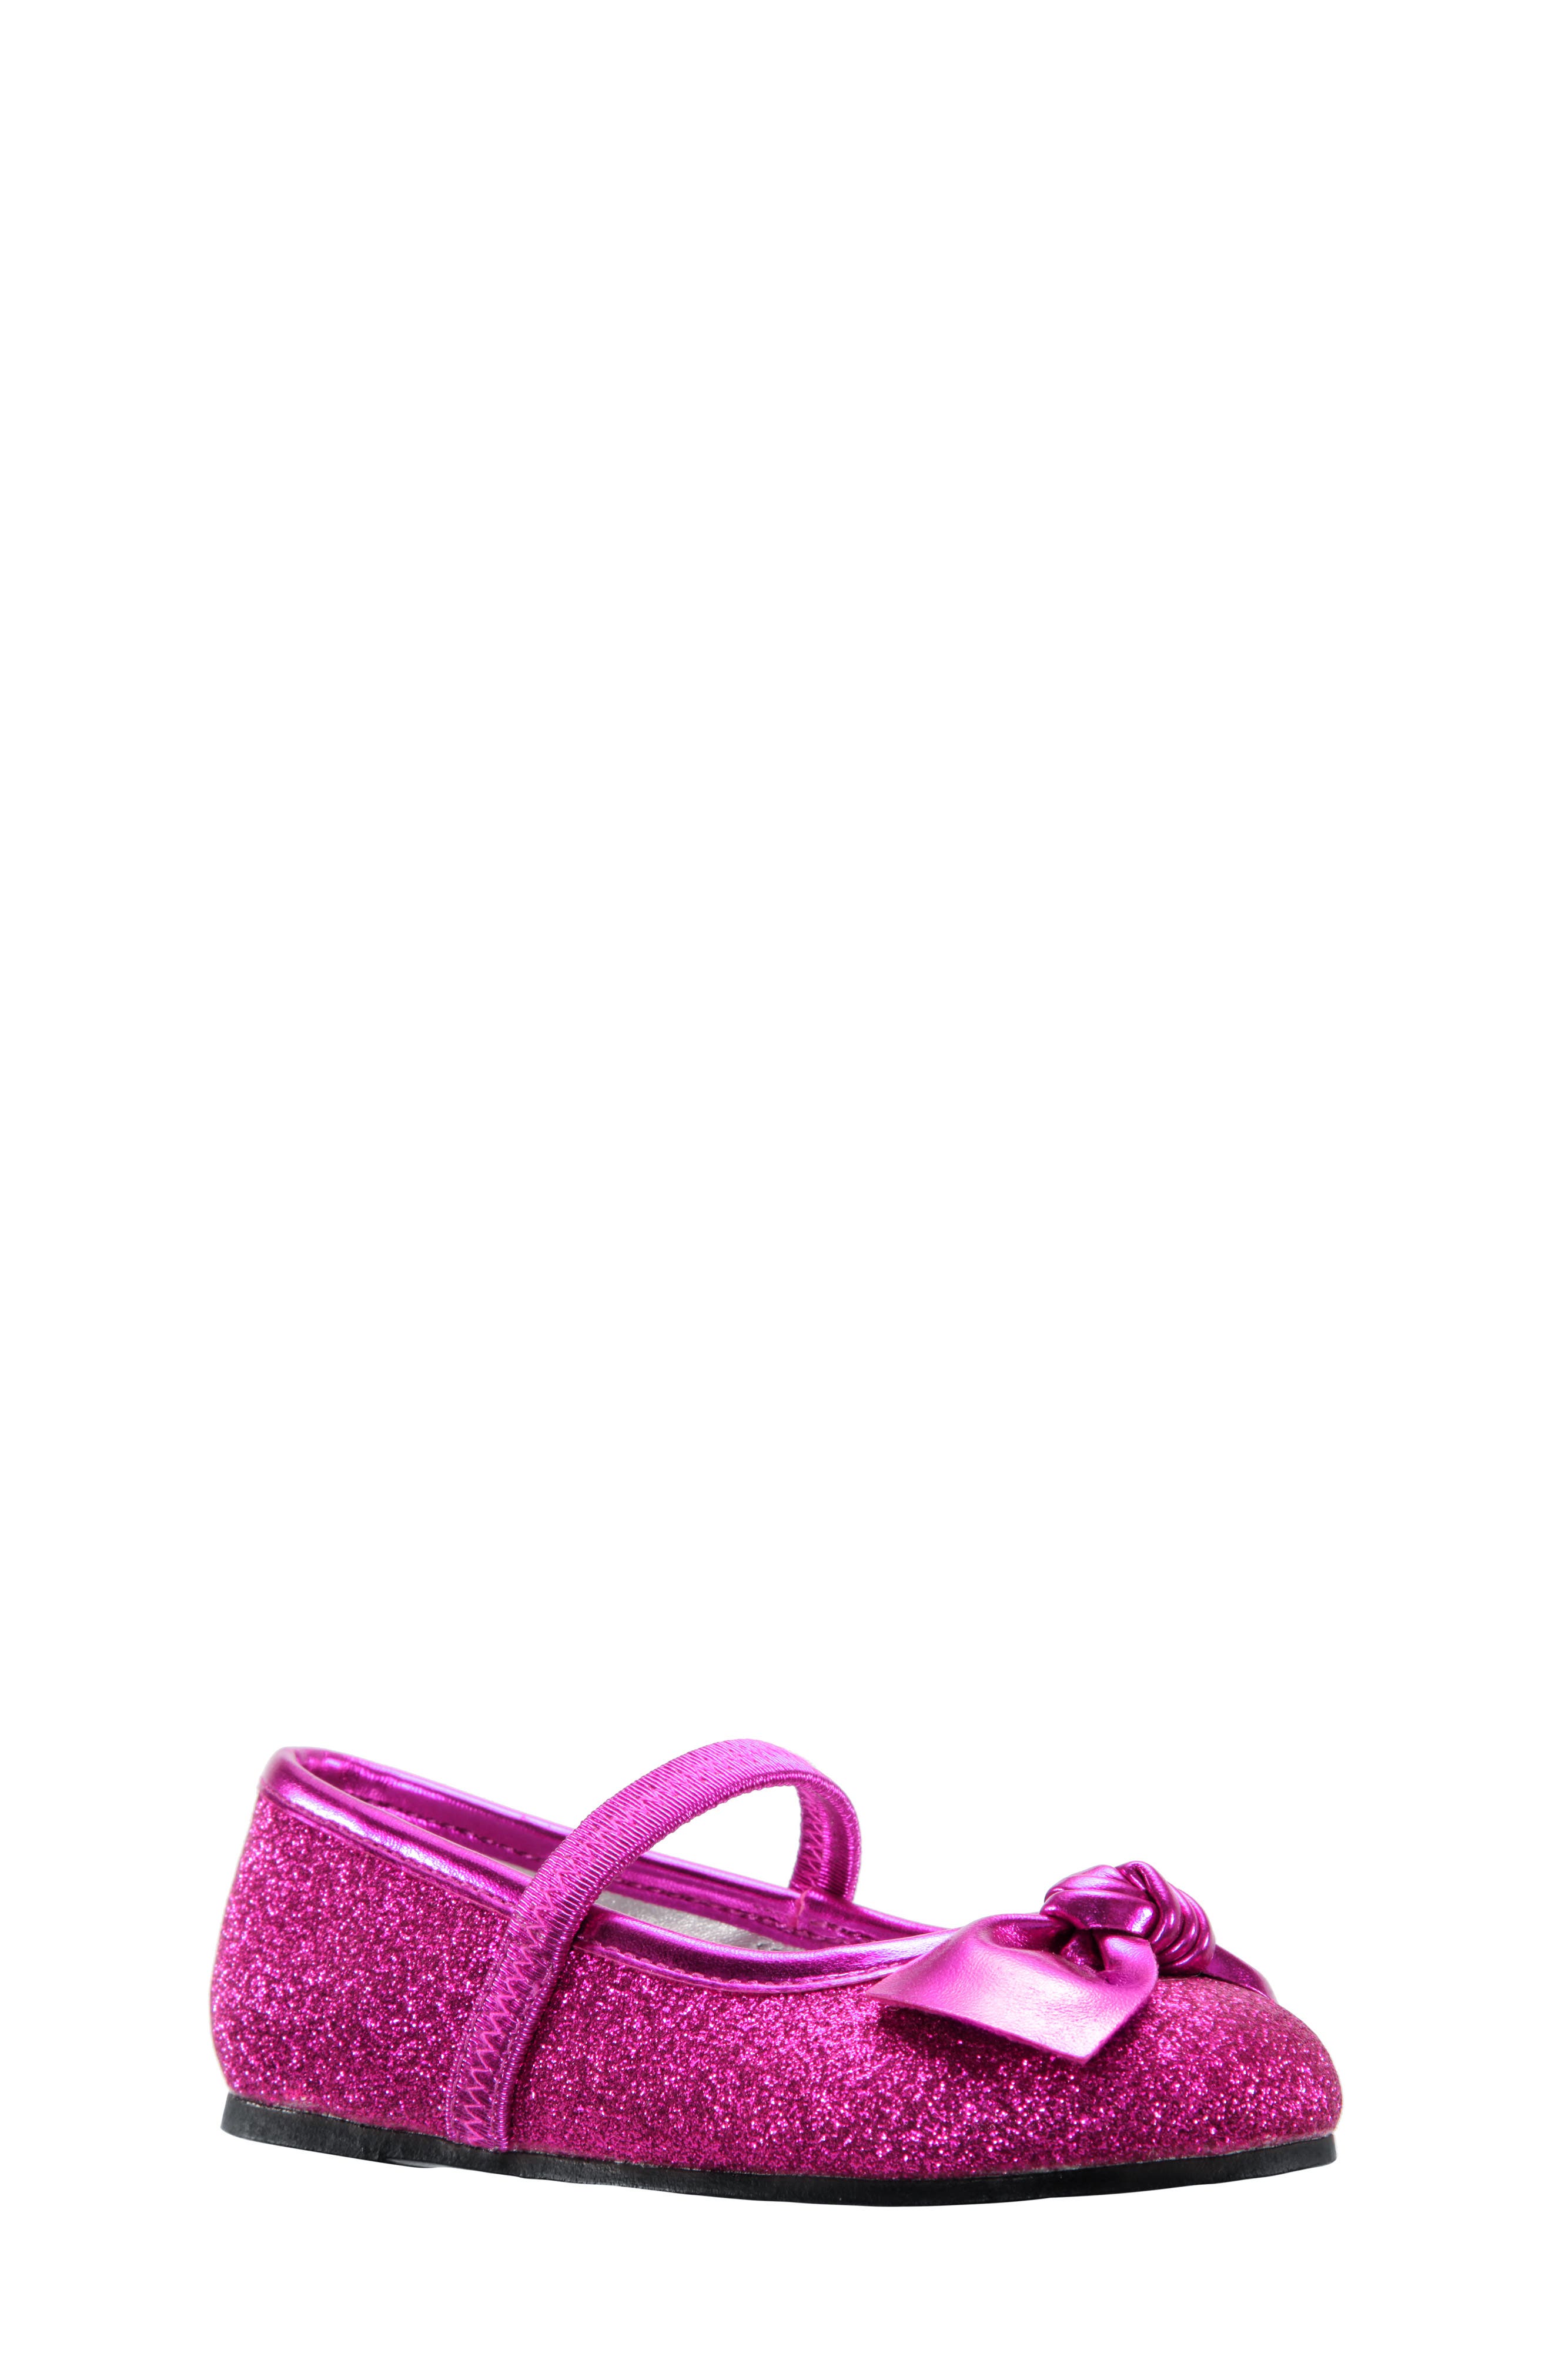 UPC 794378369158 product image for Toddler Girl's Nina Larabeth-T Glitter Bow Ballet Flat, Size 9 M - Pink | upcitemdb.com